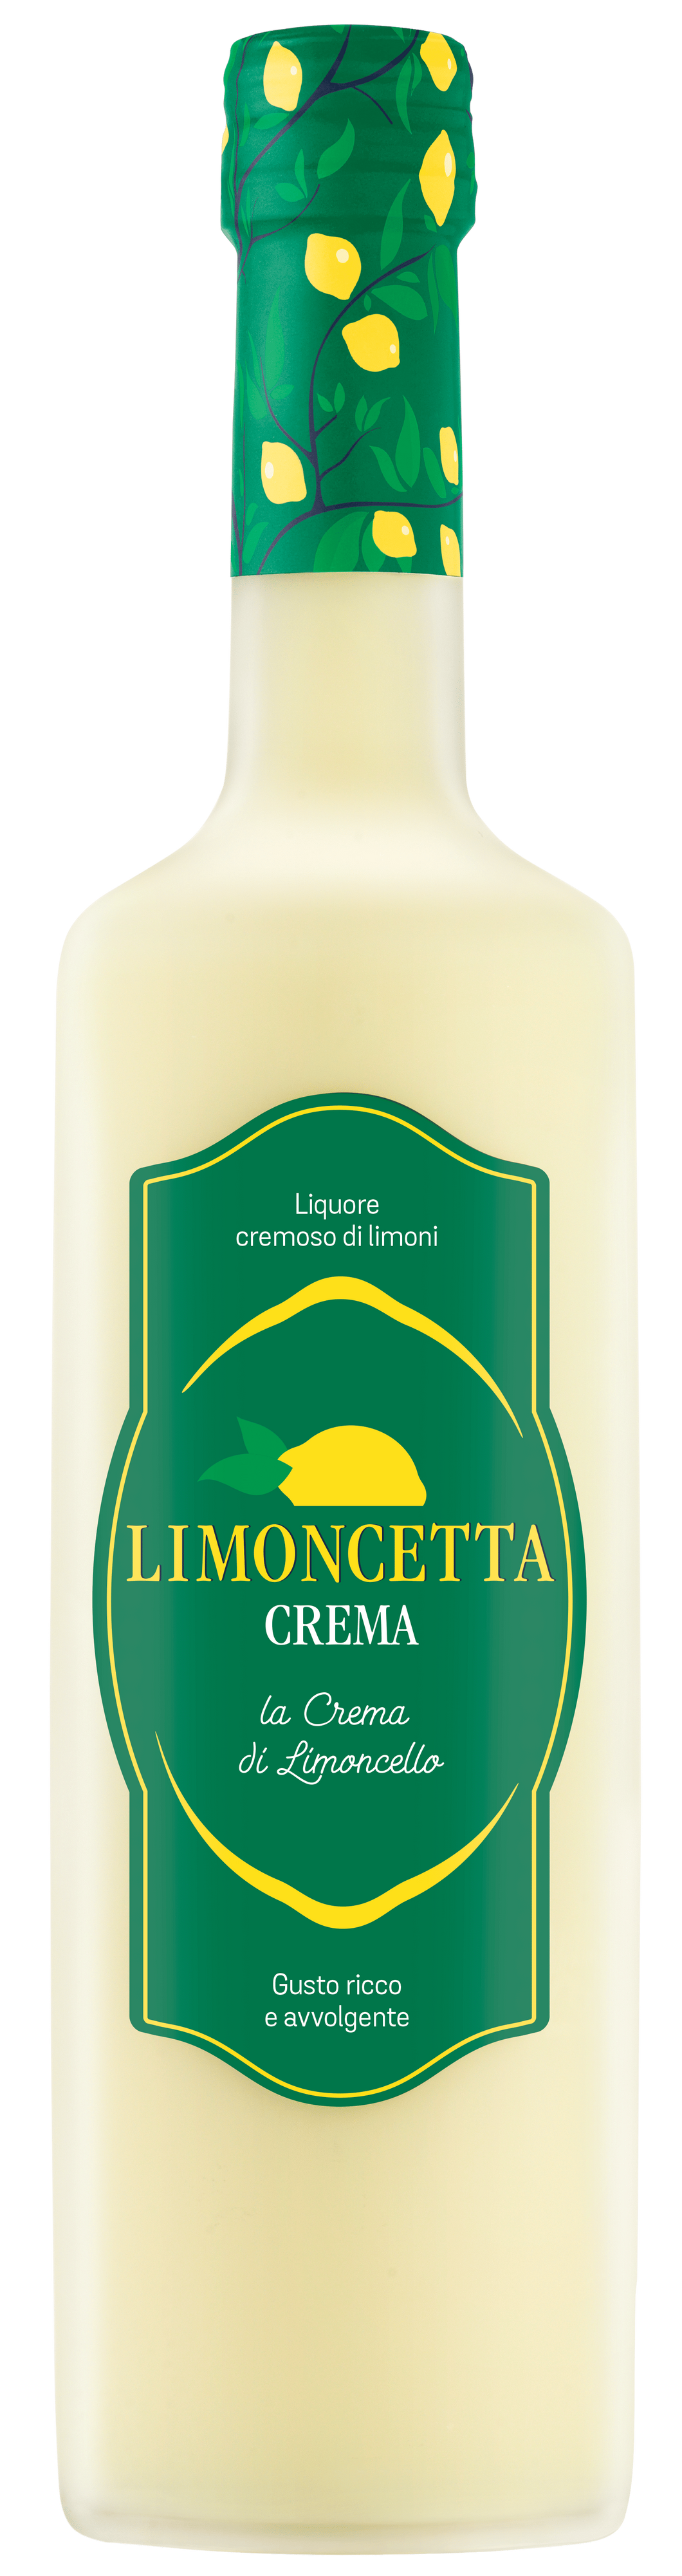 Limoncetta Crema 0,5l - SPRITHÖKER